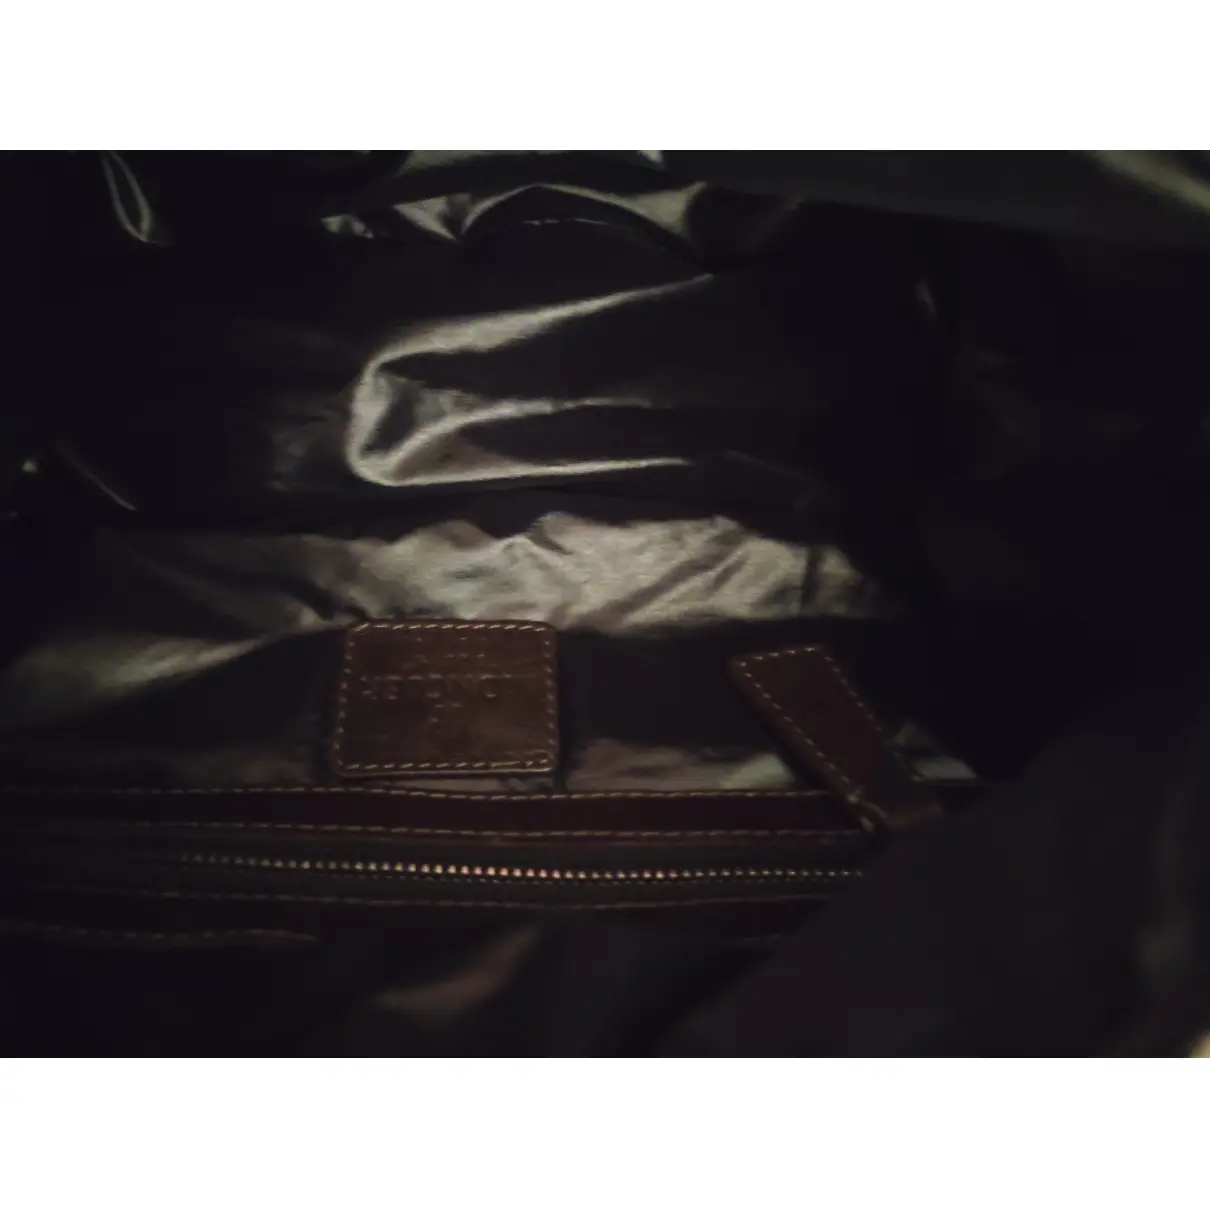 Leather handbag Moncler